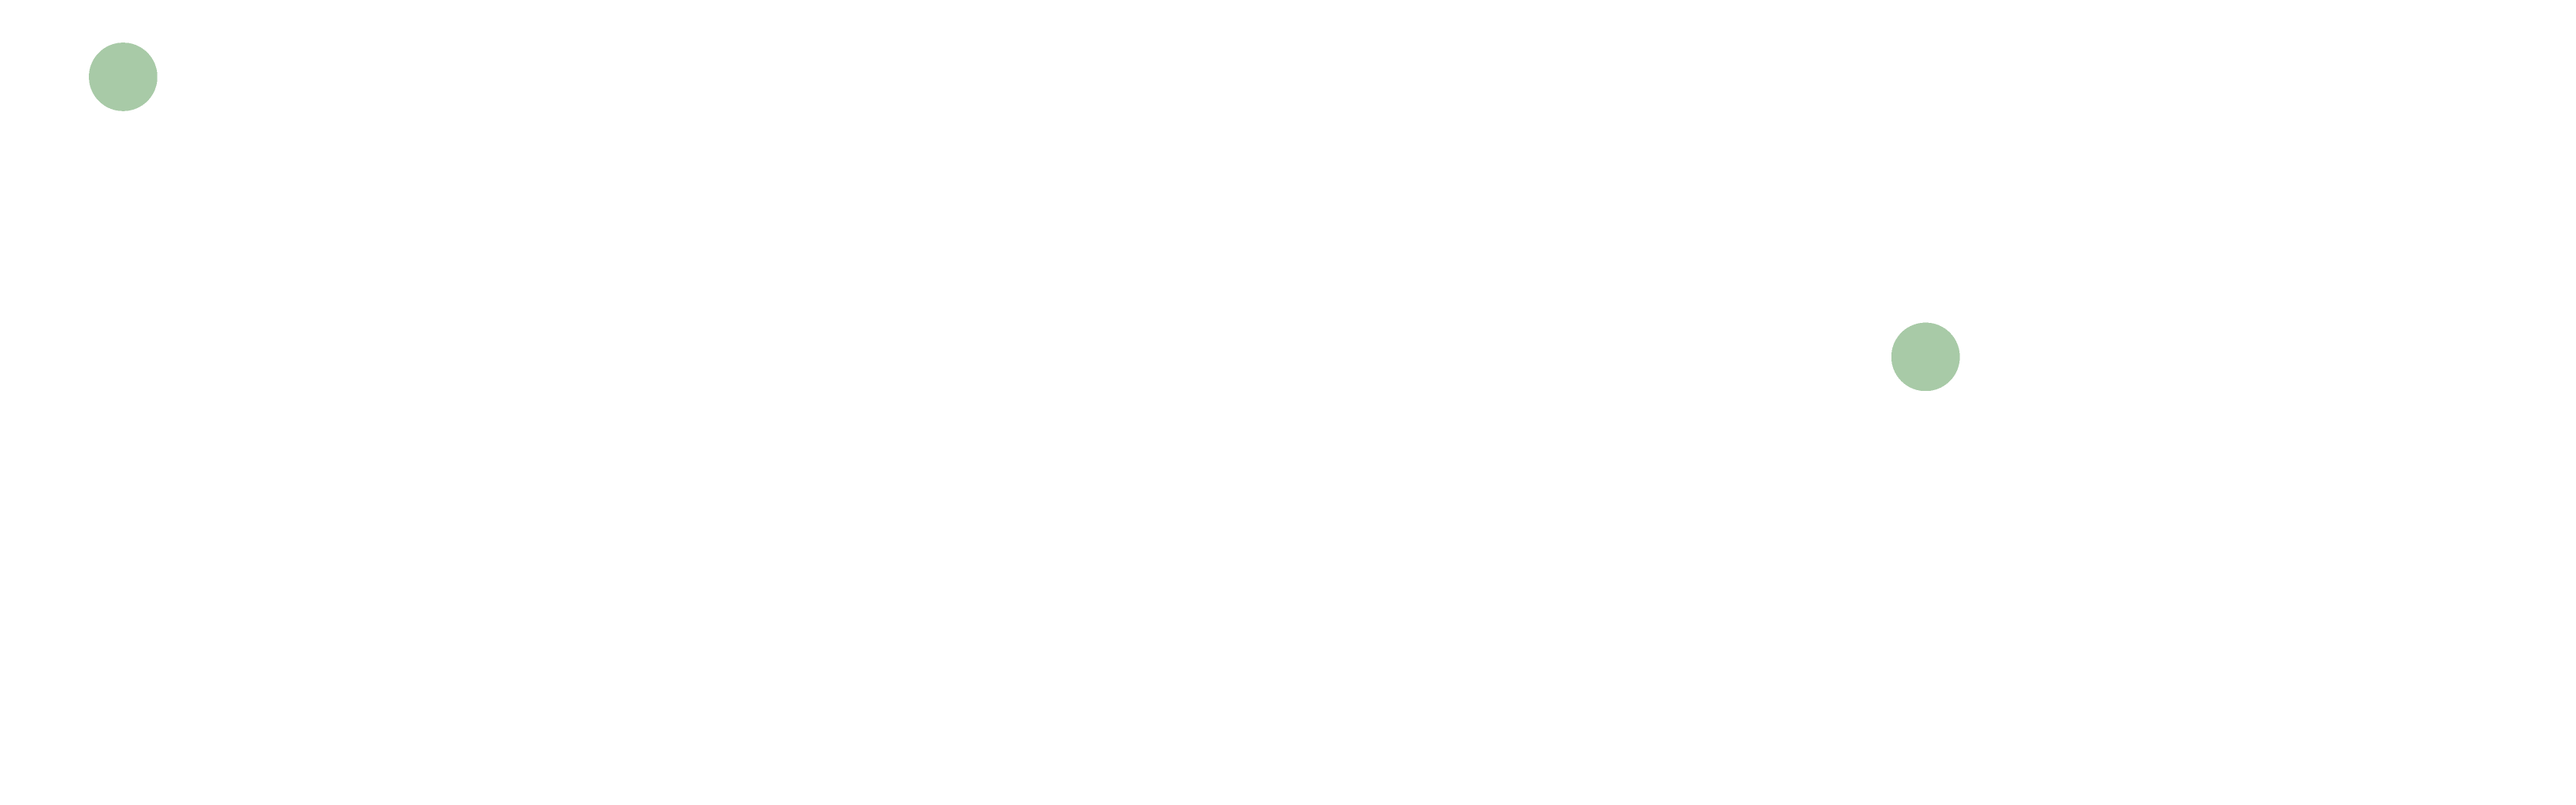 Katalytic Digital logo